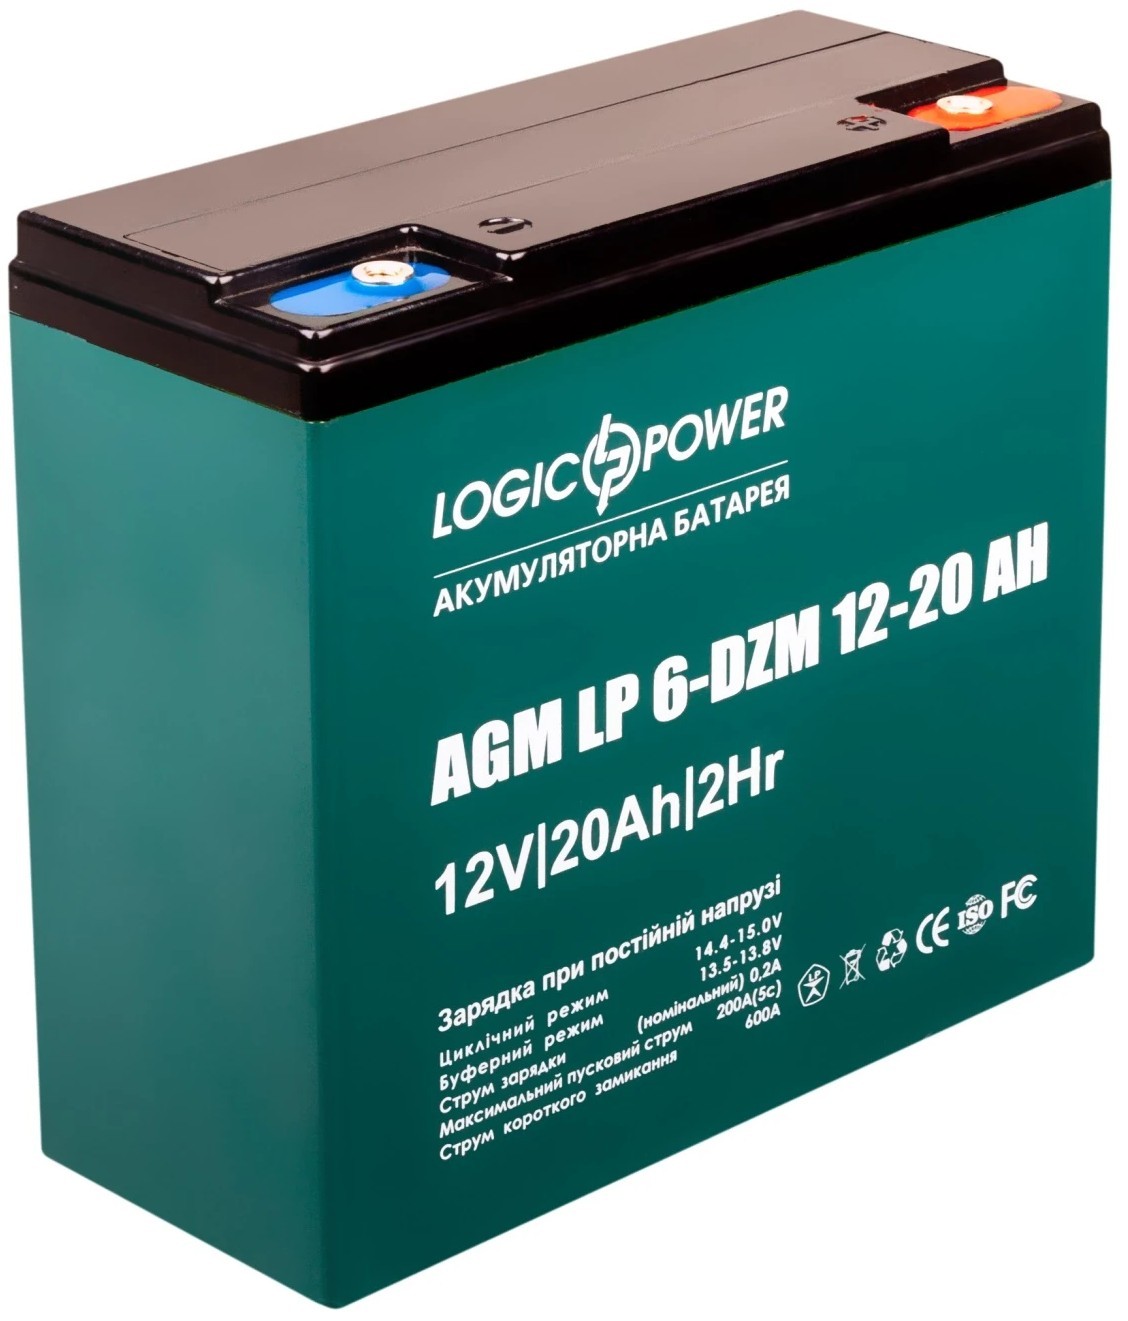 в продаже Аккумулятор LogicPower LP 12V-20Ah (6-DZM-12-20) - фото 3